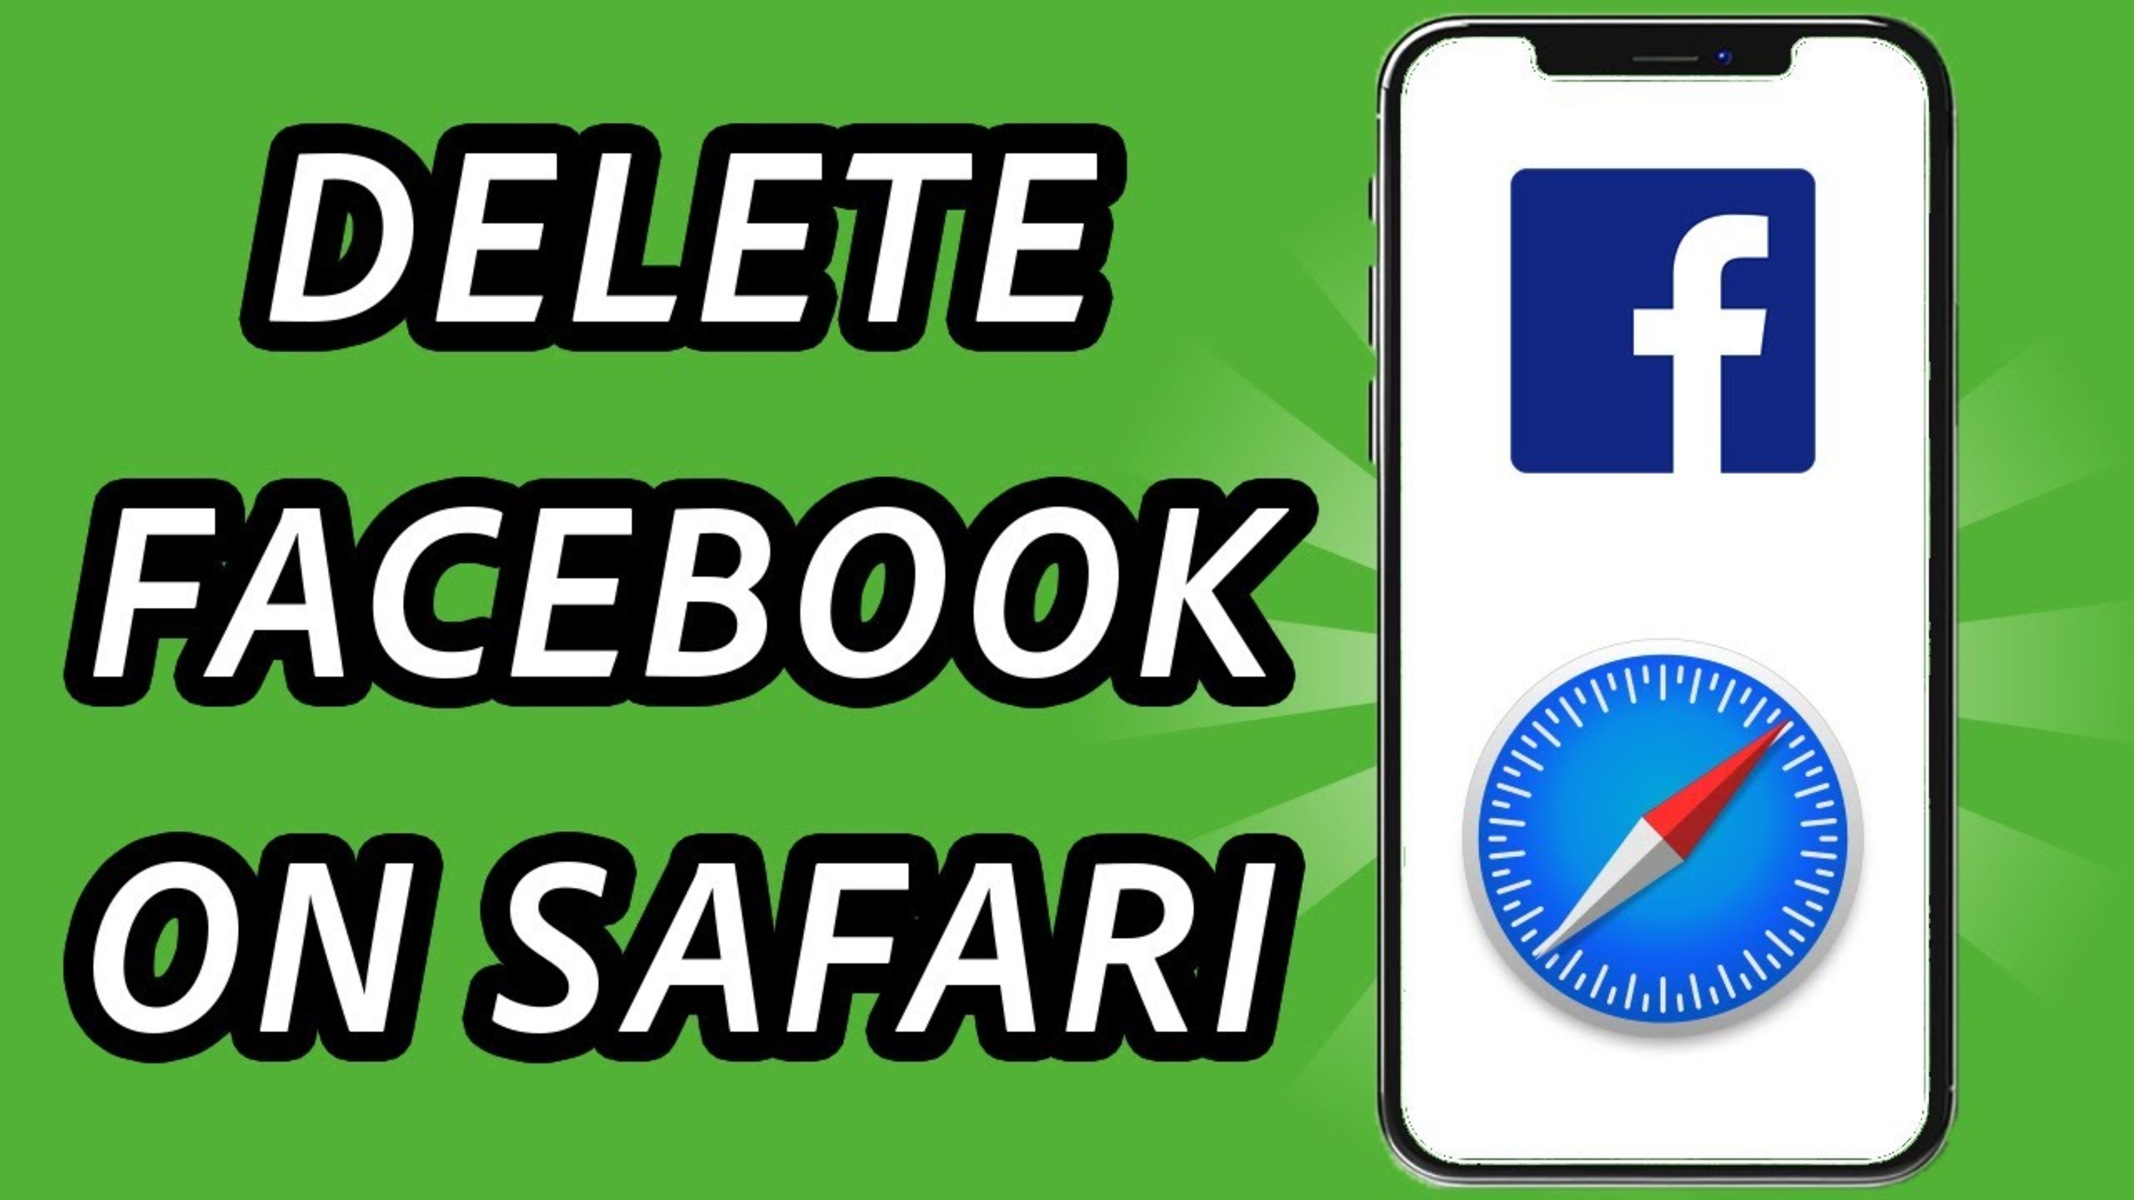 How To Delete Facebook On Safari